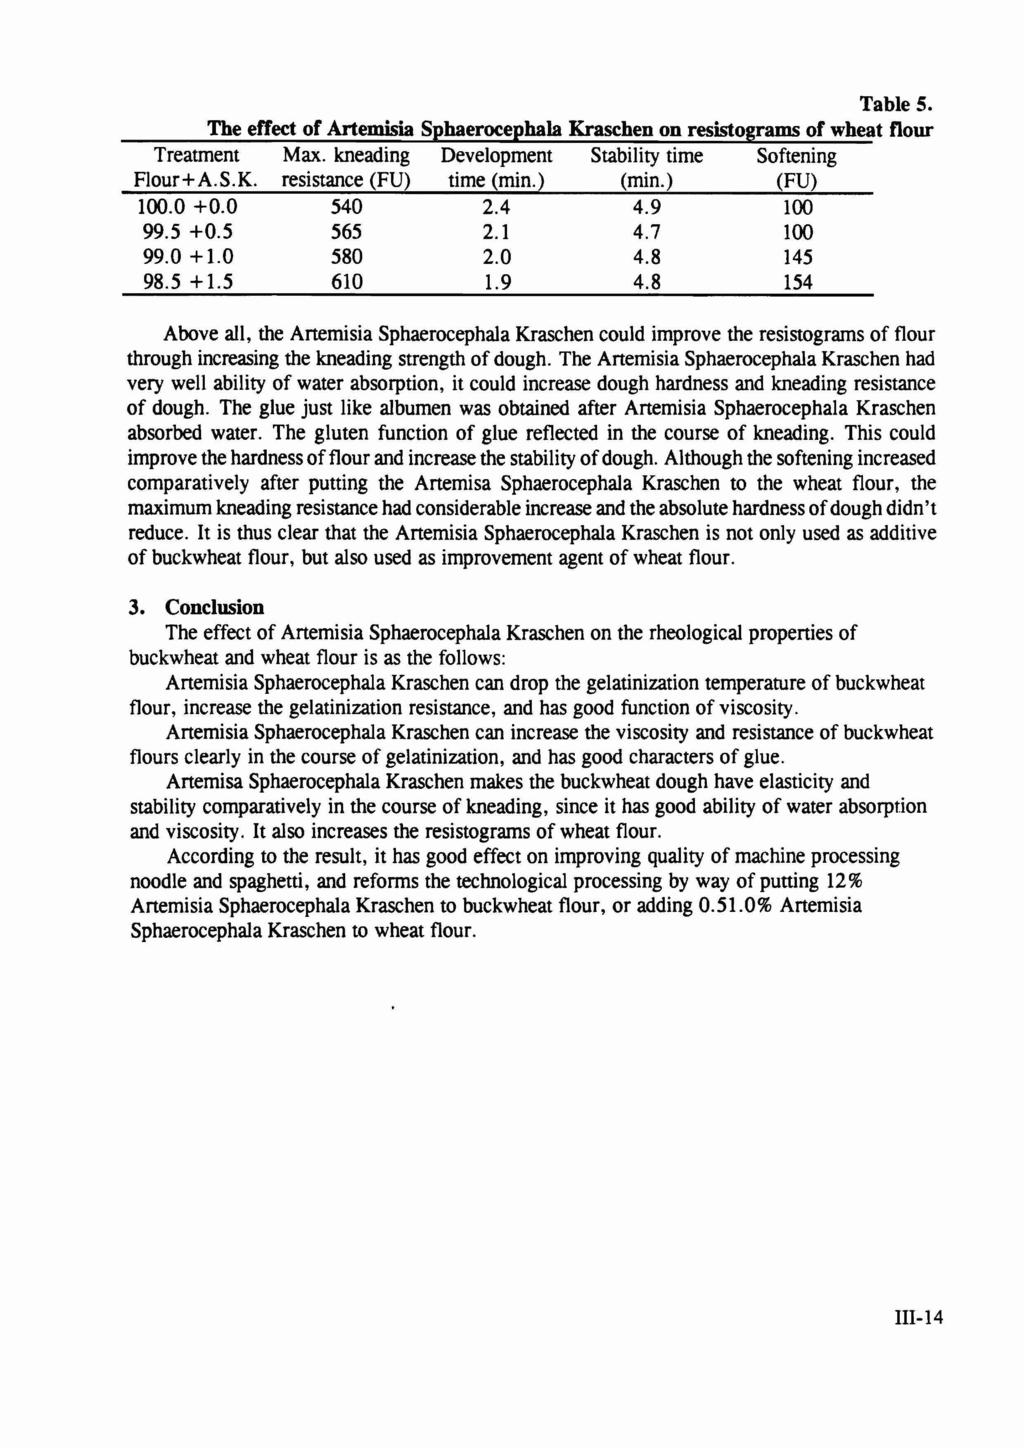 Table 5. The effect of Artemisia Spbaerocepbala Kraschen on resistograms of wheat flour Treatment Max. kneading Development Stability time Softening Flour + A.S.K. resistance (FU) time (min.) (min.